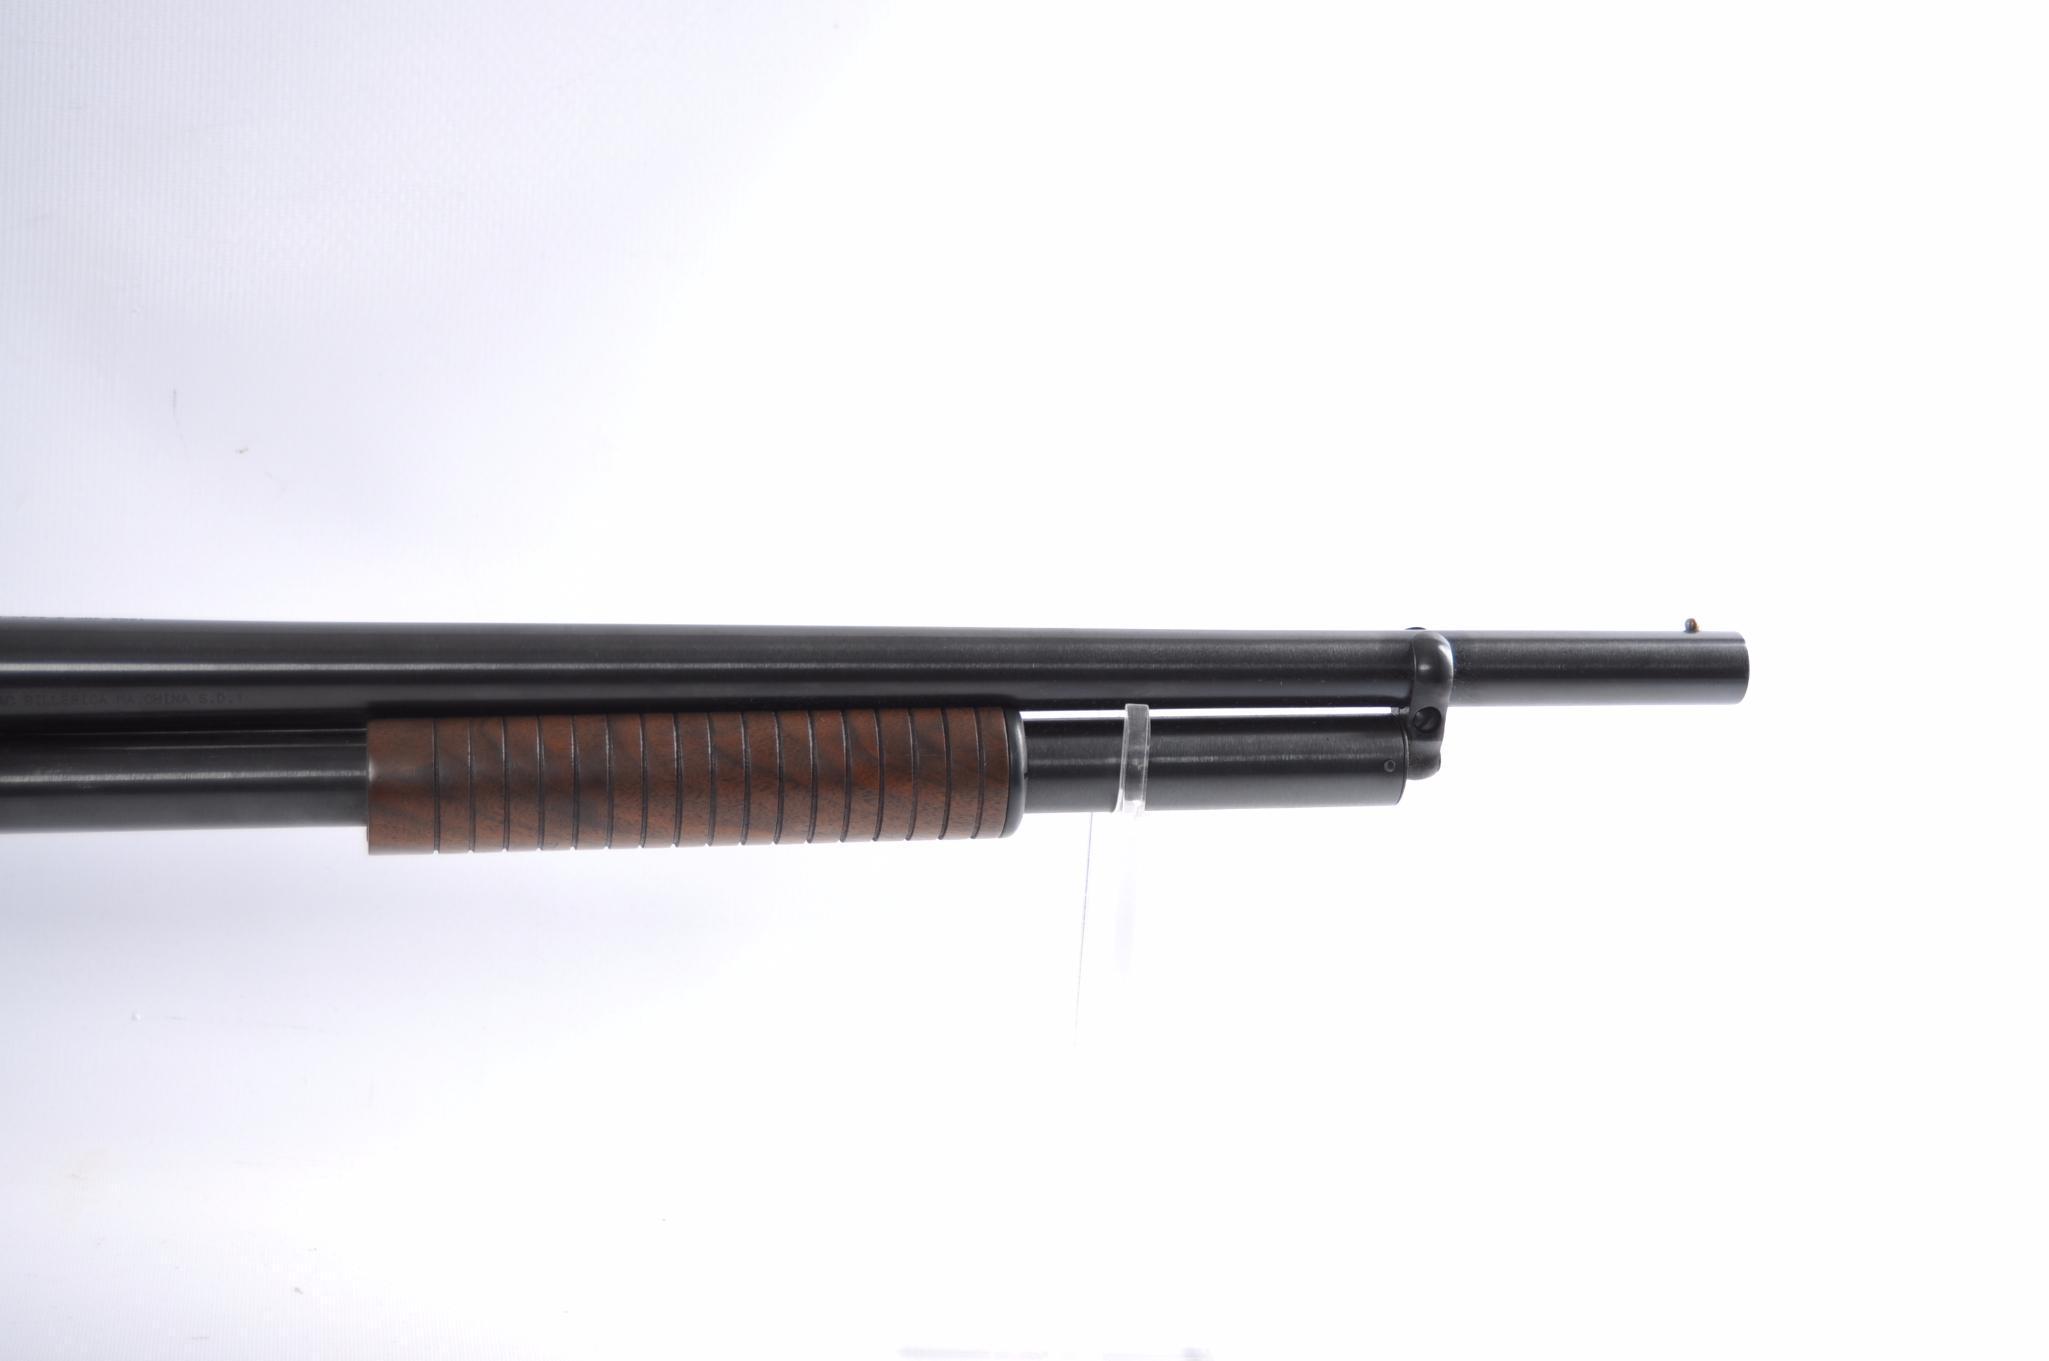 Lac Billerica model 93/97 12 gauge pump action shotgun